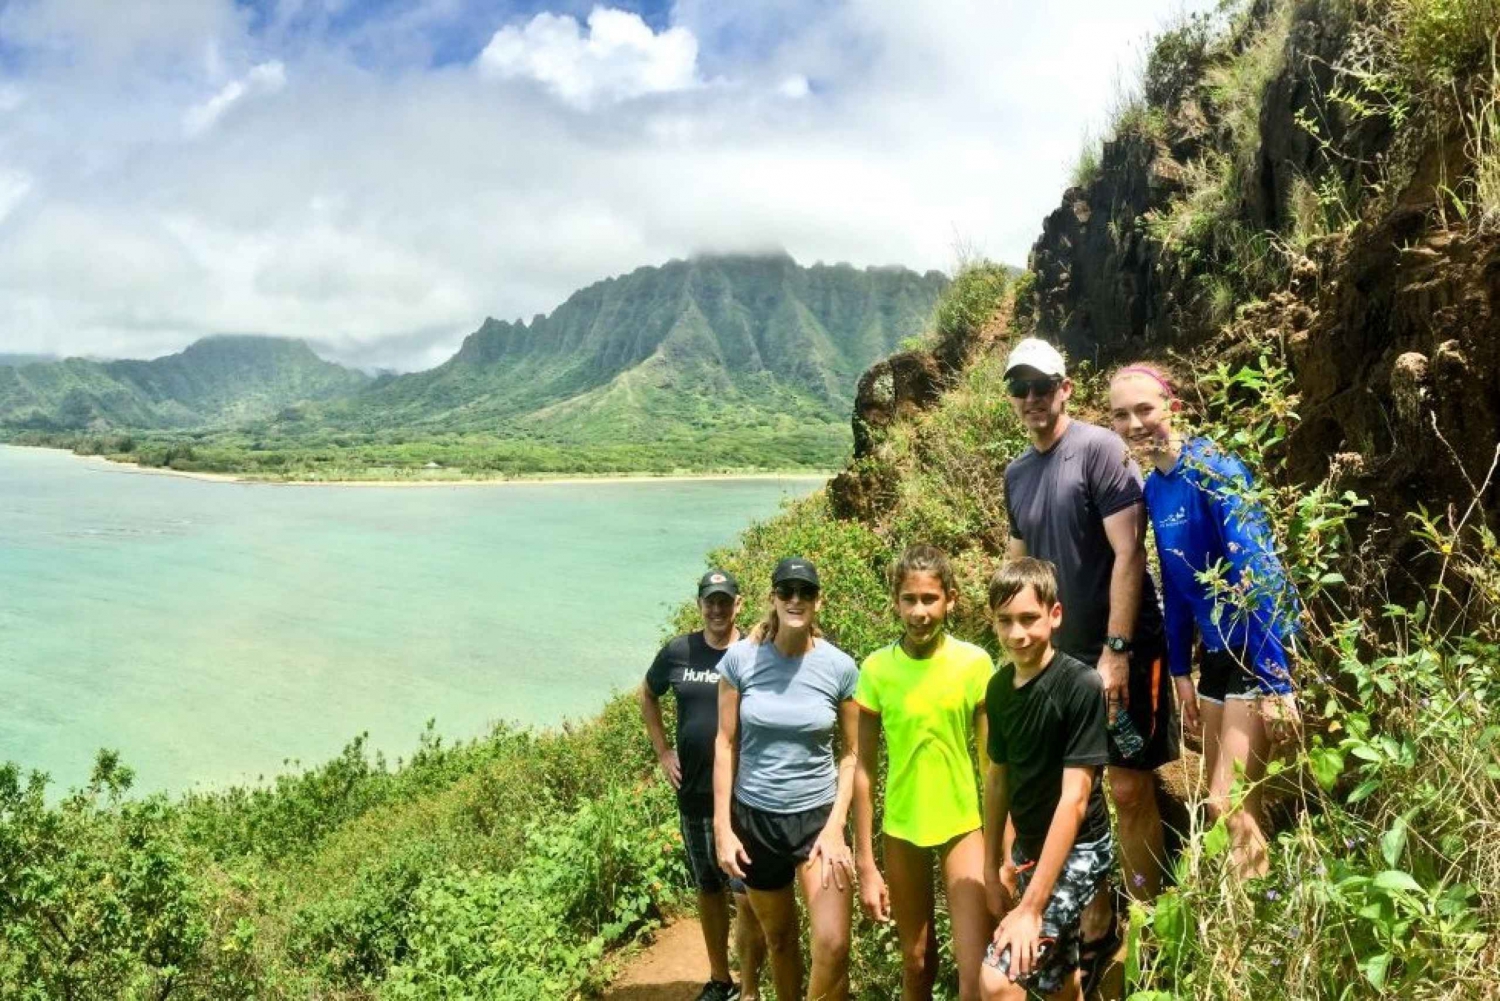 Oahu: Mokoliʻi Kayak Rental and Self-Guided Hike